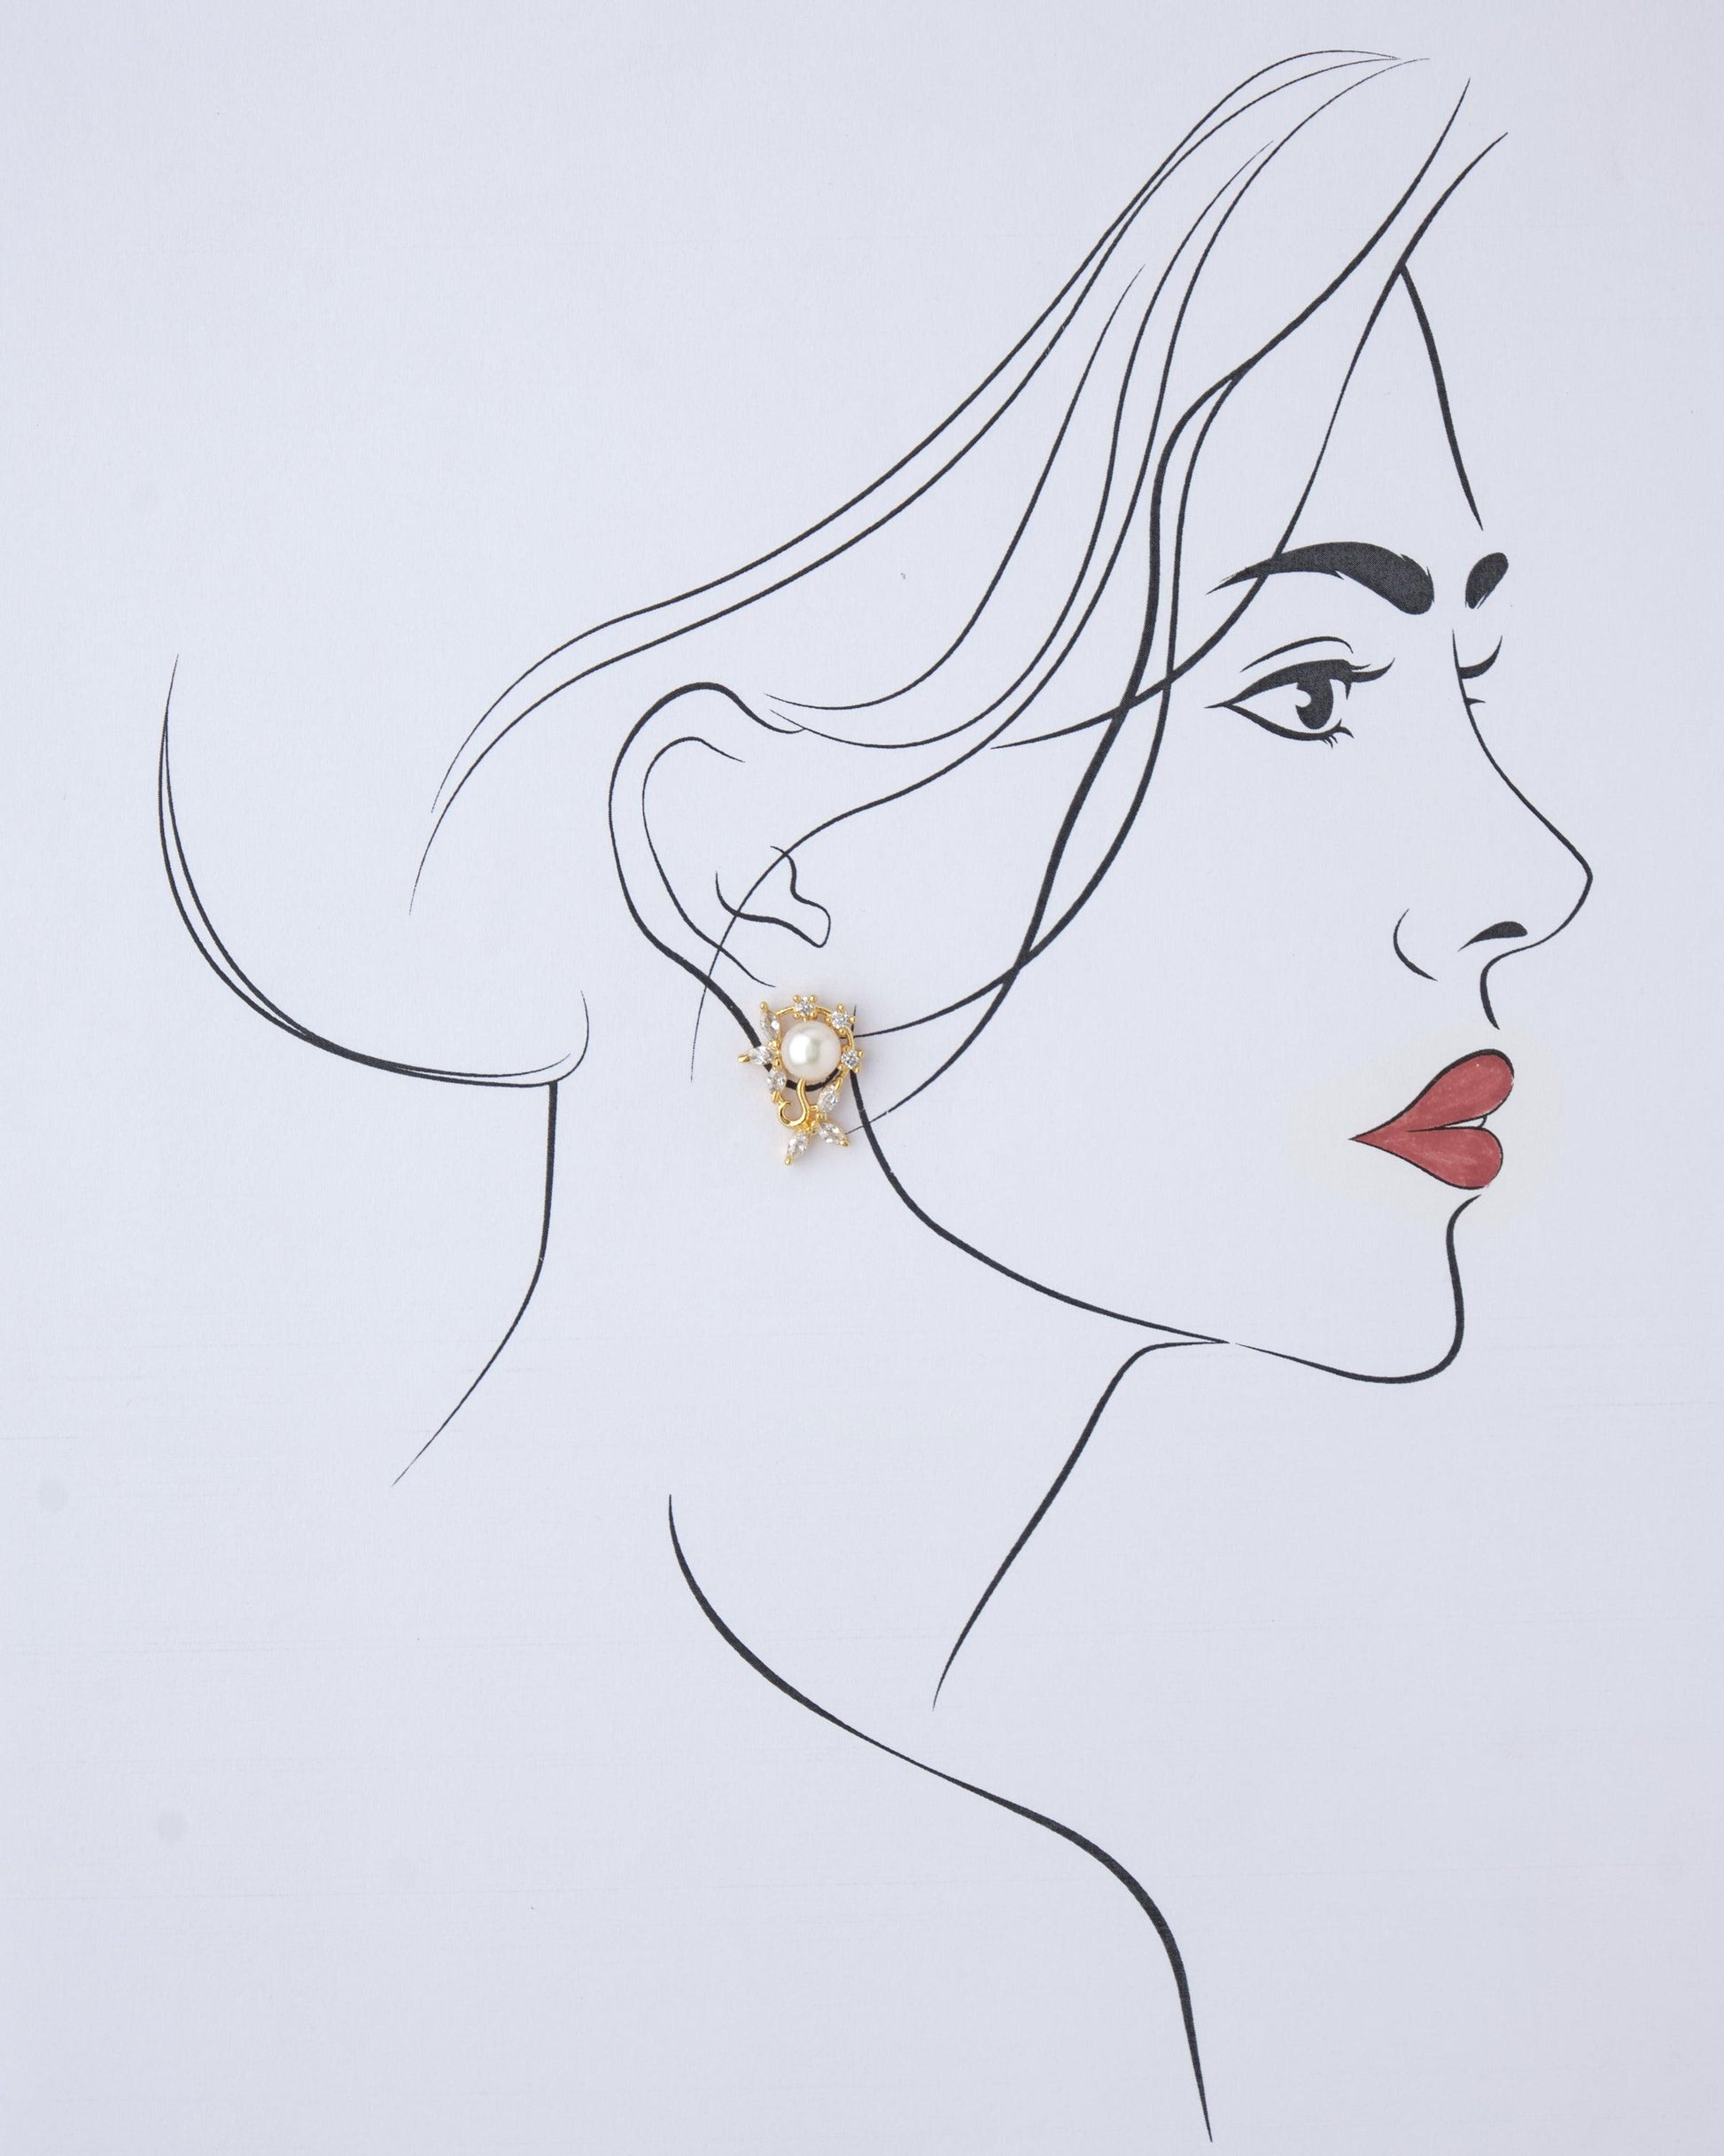 Floral Pearl & Stone Stud Earring - Chandrani Pearls